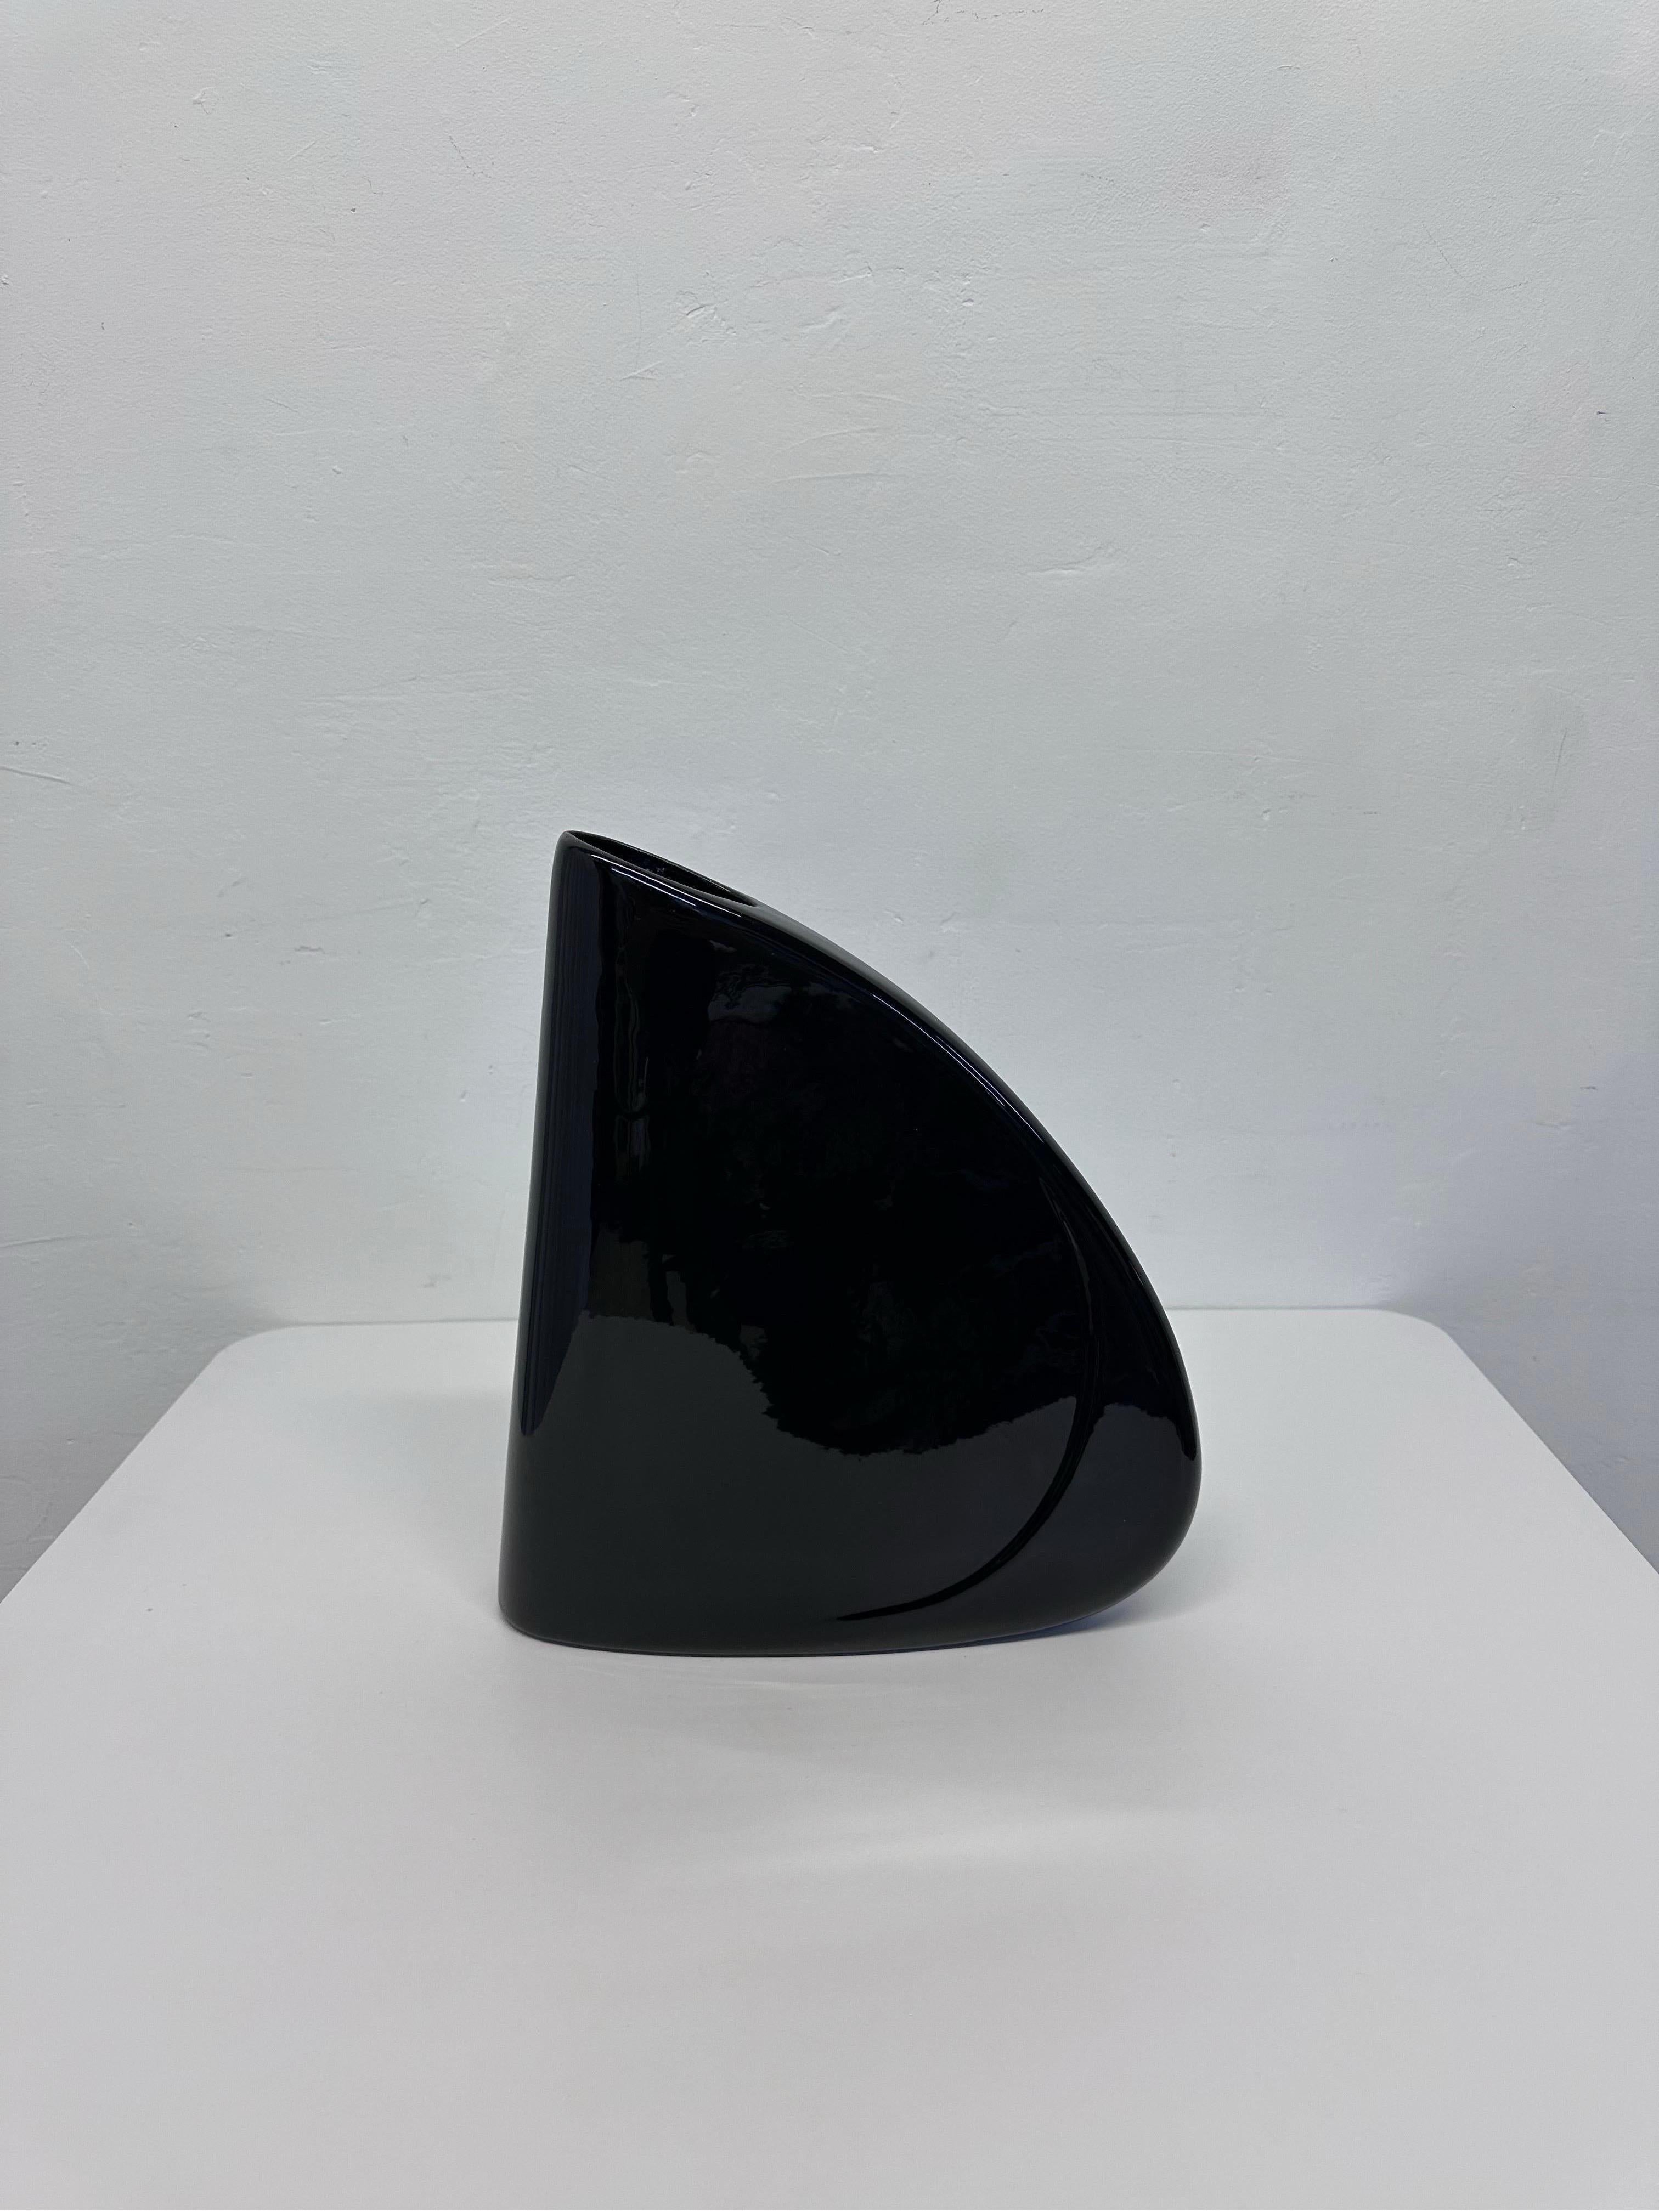 20th Century Modern Black Ceramic Vase by Haeger, 1985 For Sale